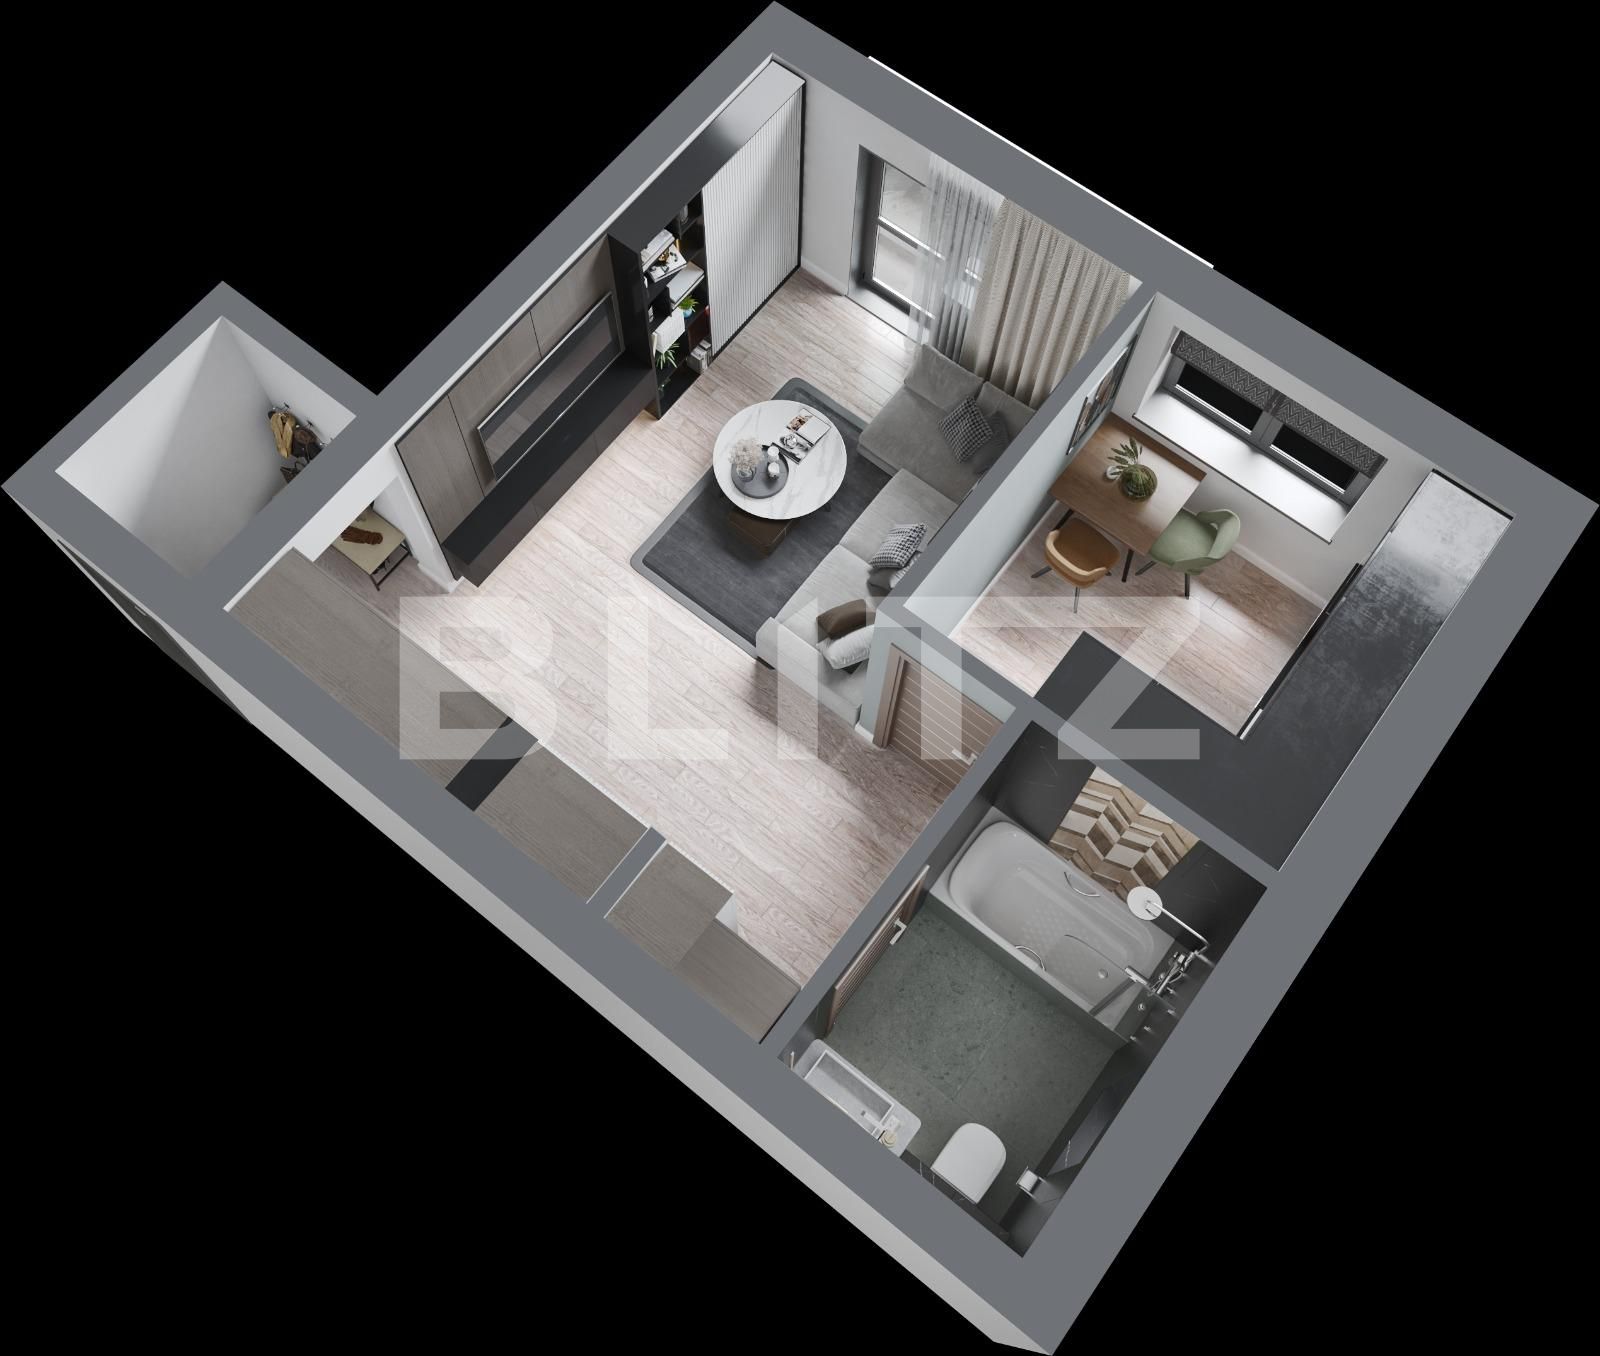 Apartament premium cu sistem smart home, 1 camera, 41 mp, intr-un cartier rezidential